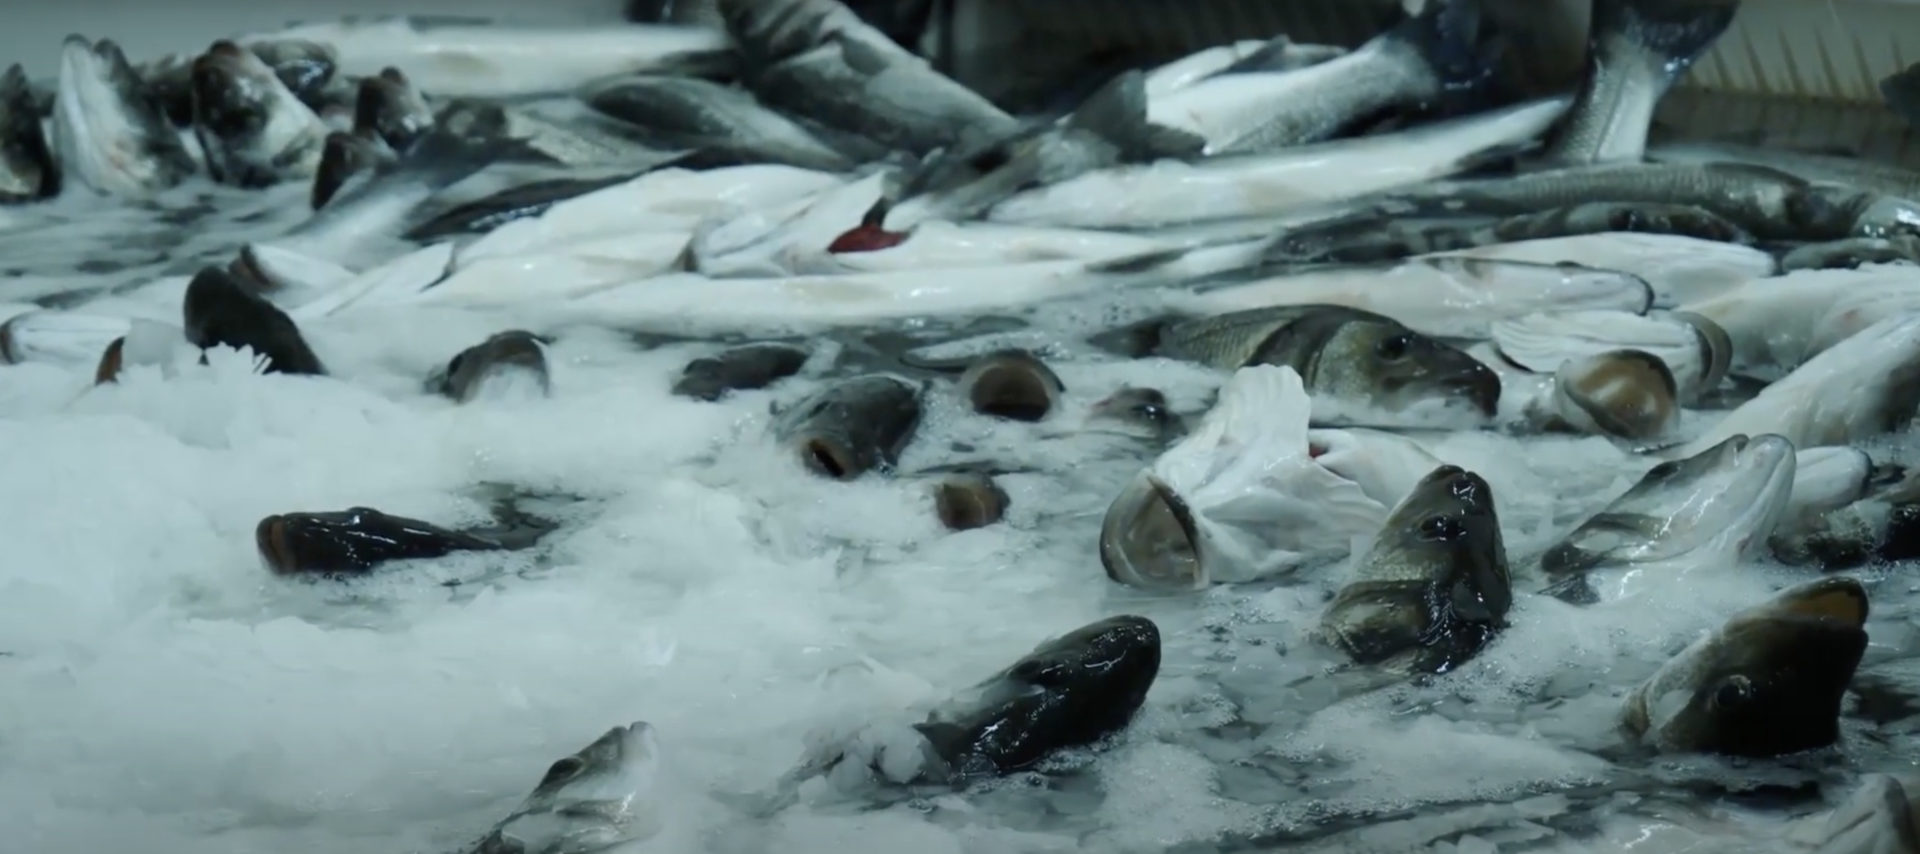 Ocean desolation: how fish farm pollution is killing marine life in Greece 6